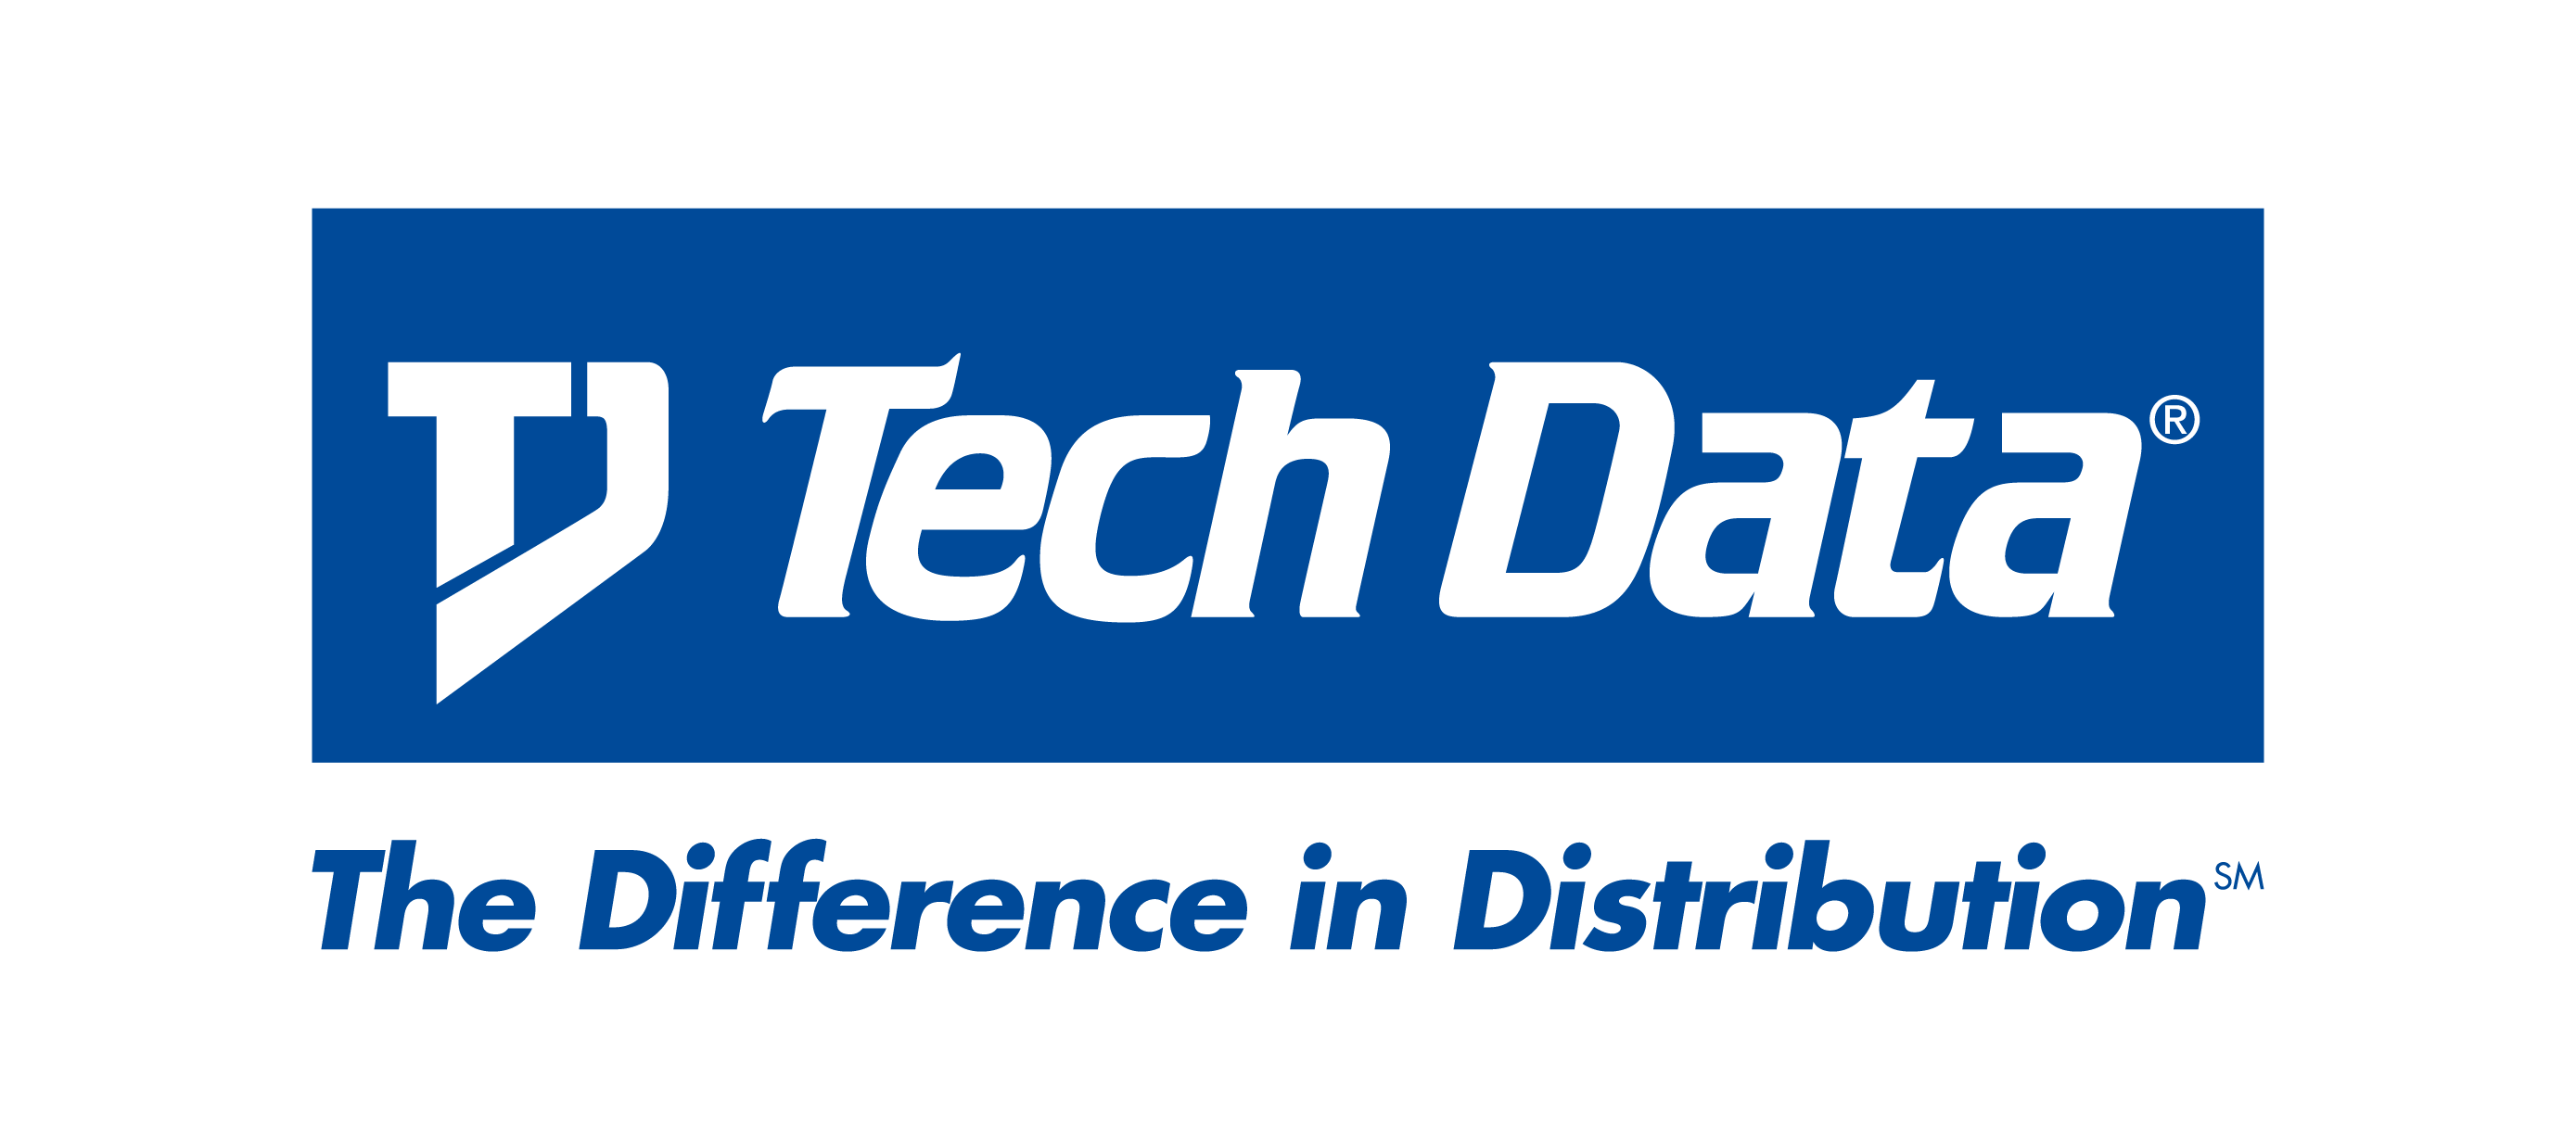 Tech Data Corporation Logo - Tech data Logos